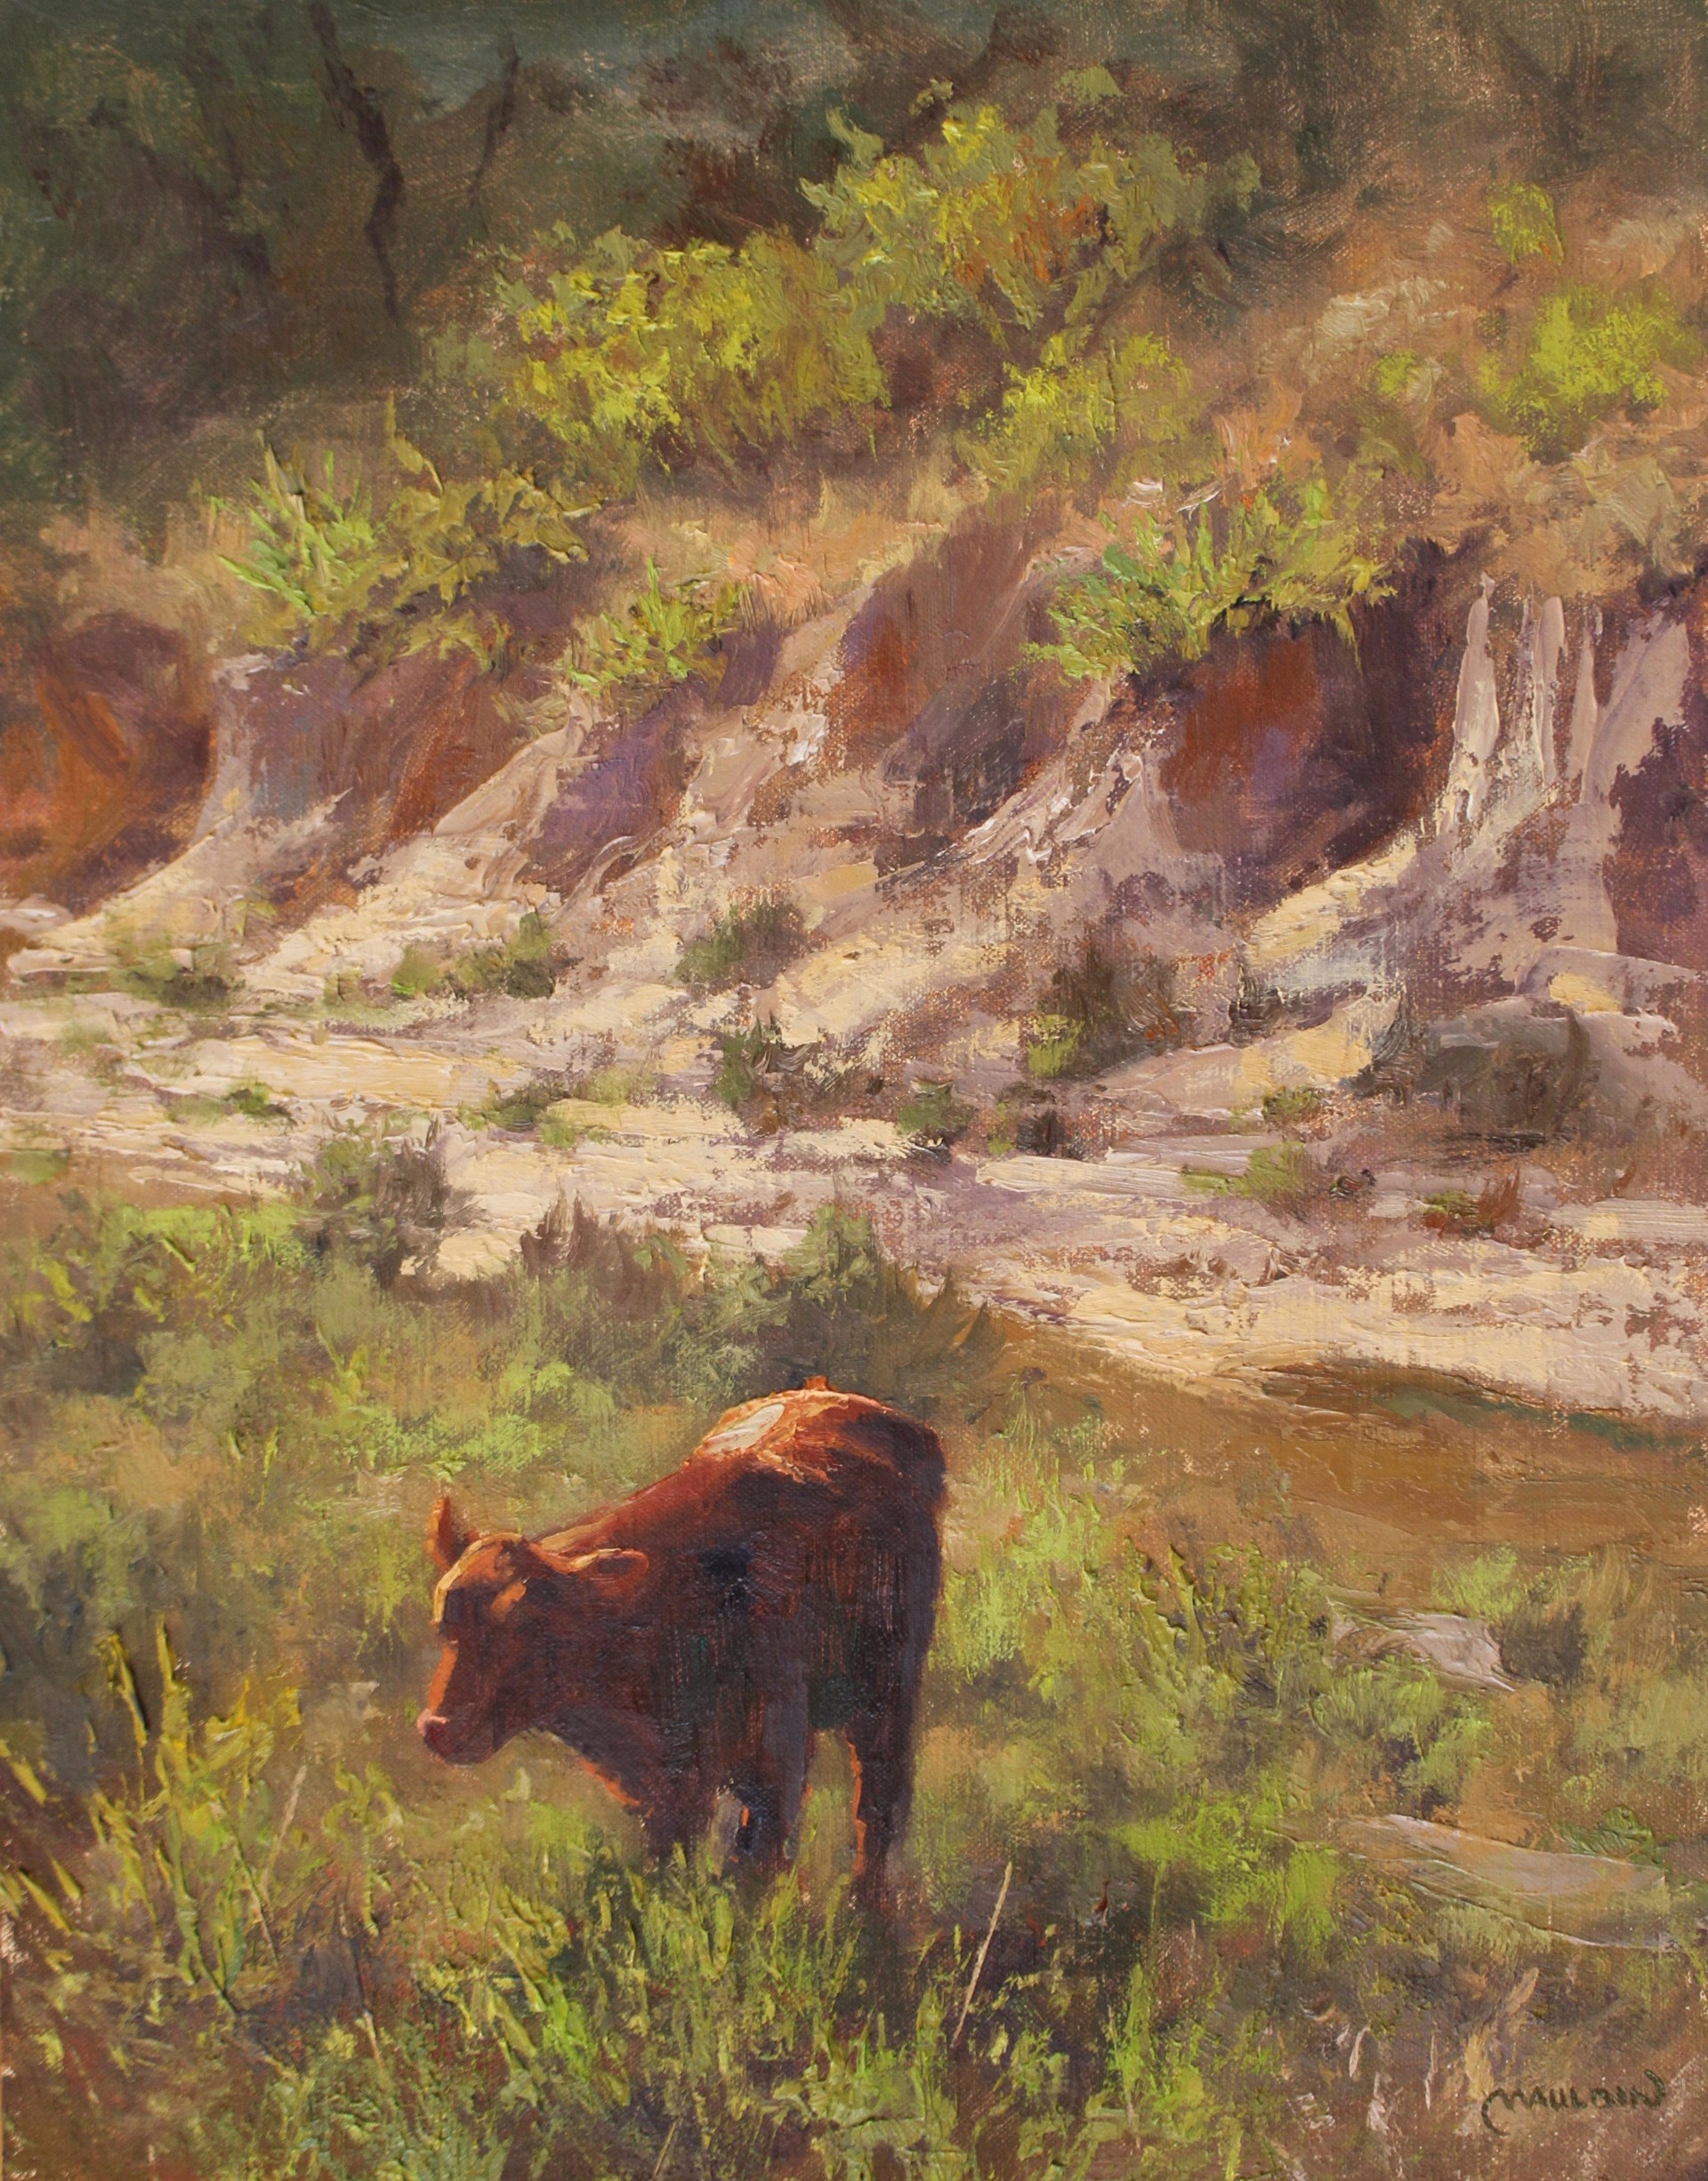 Browsing the Creek by Chuck Mauldin